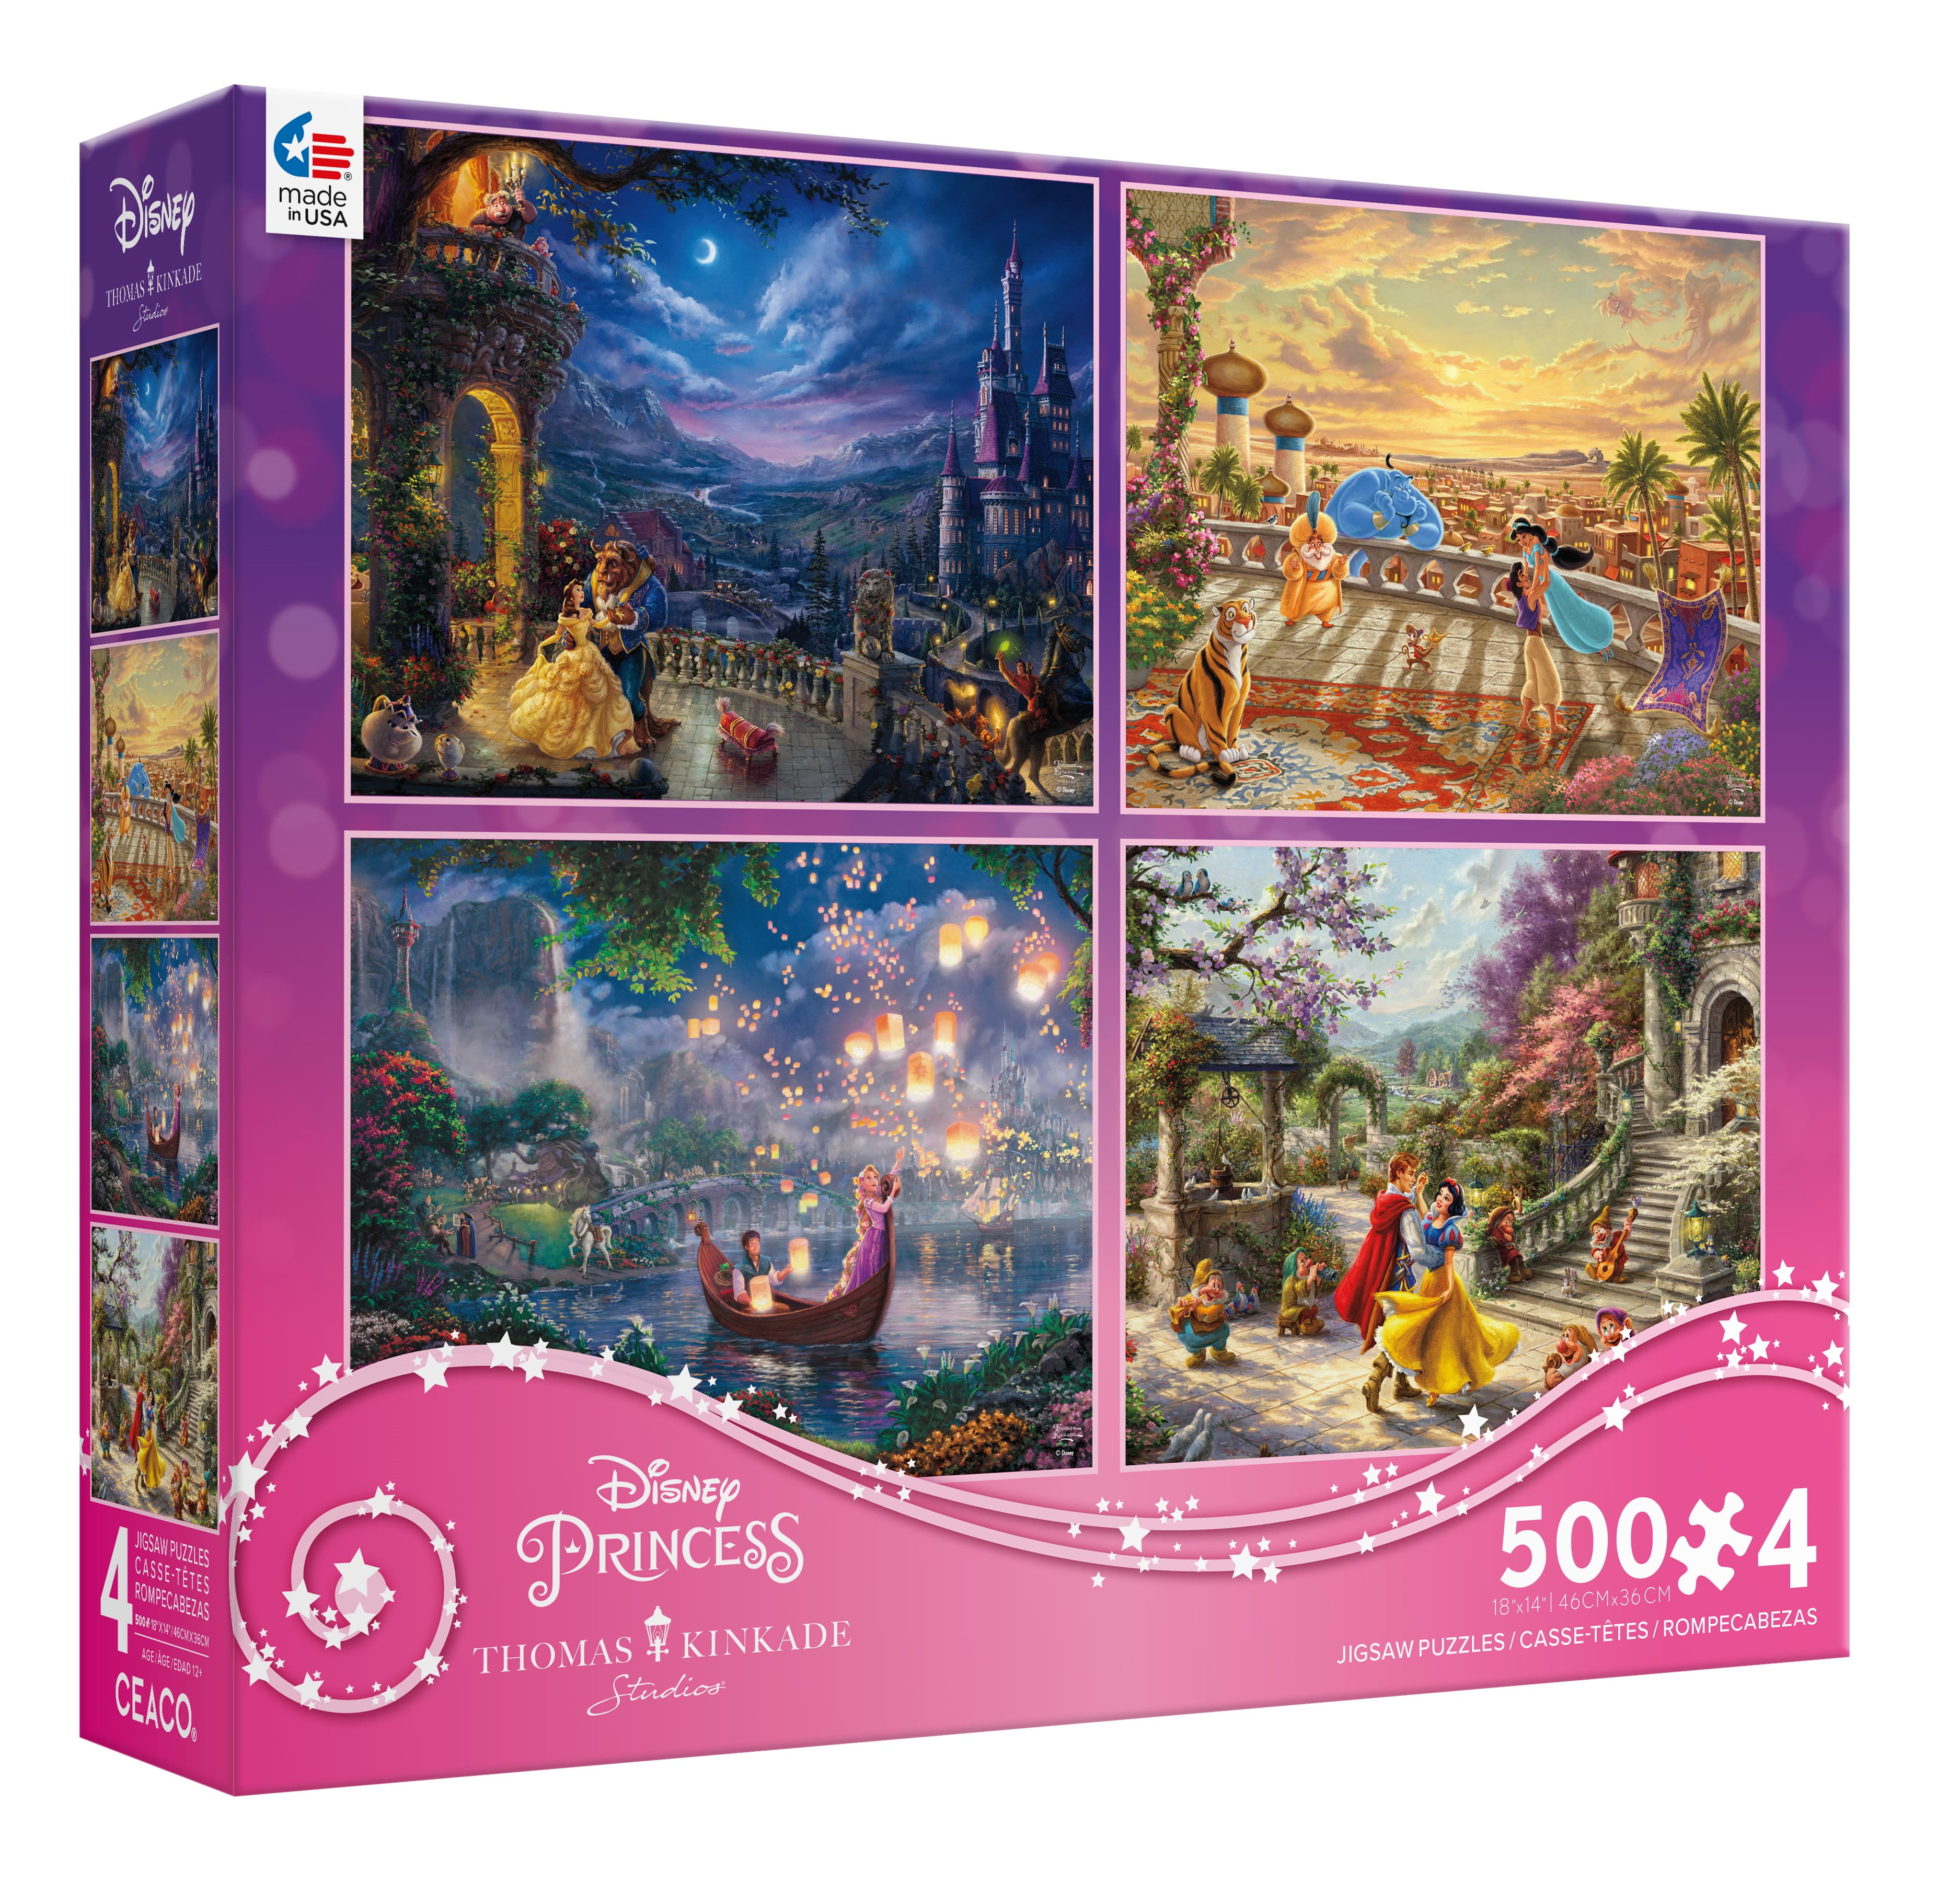 Thomas Kinkade Disney Jigsaw Puzzle - 4 Pack - 500 Pieces - No. 036672, 1 -  Harris Teeter